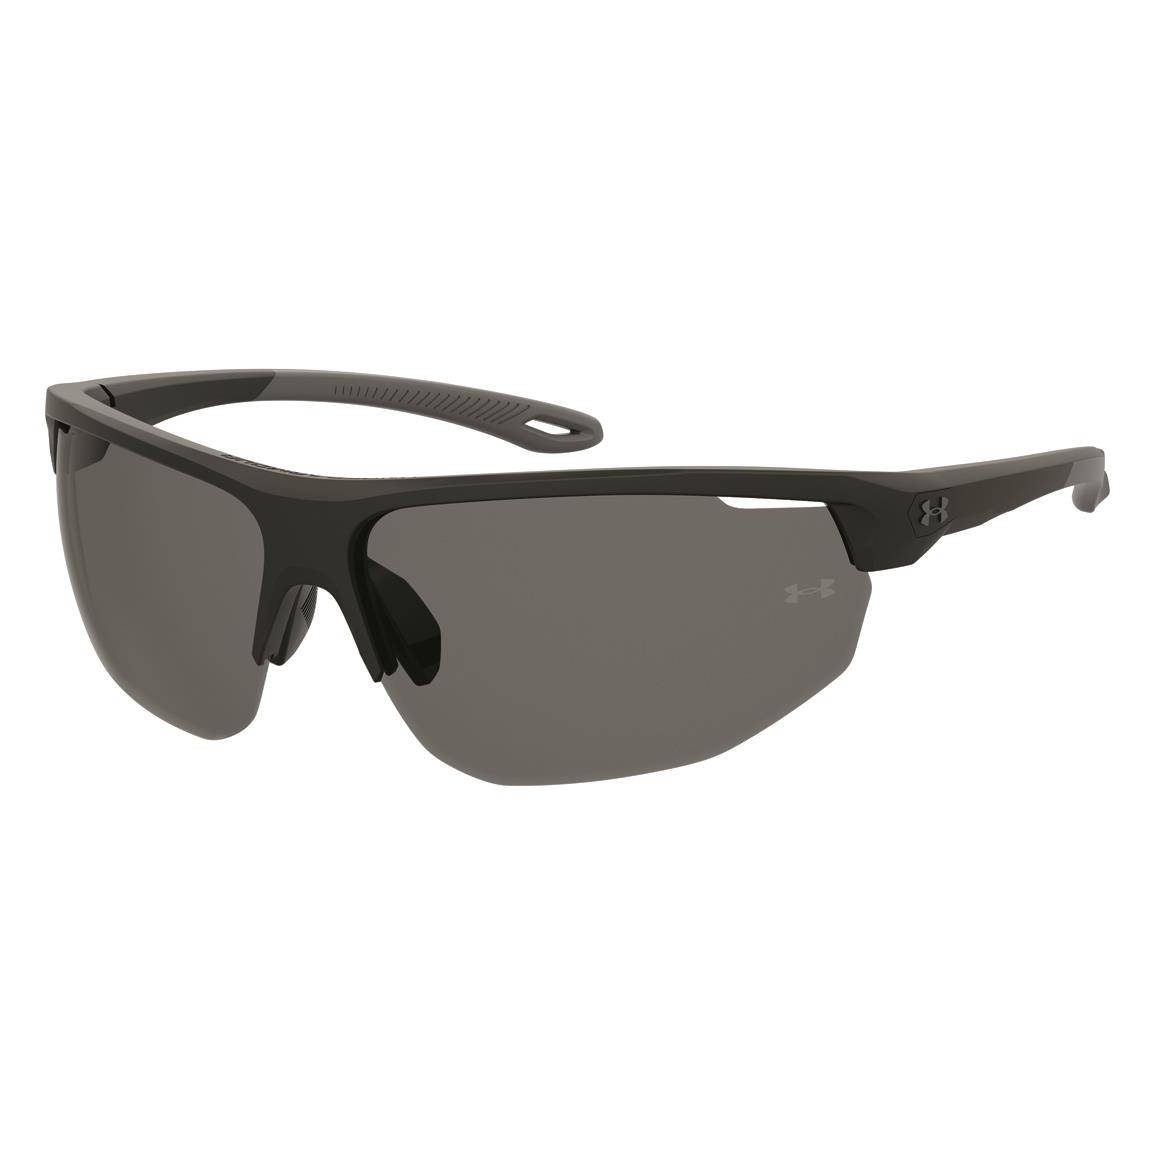 Under Armour Clutch Polarized Sunglasses, Matte Black/gray Polarized